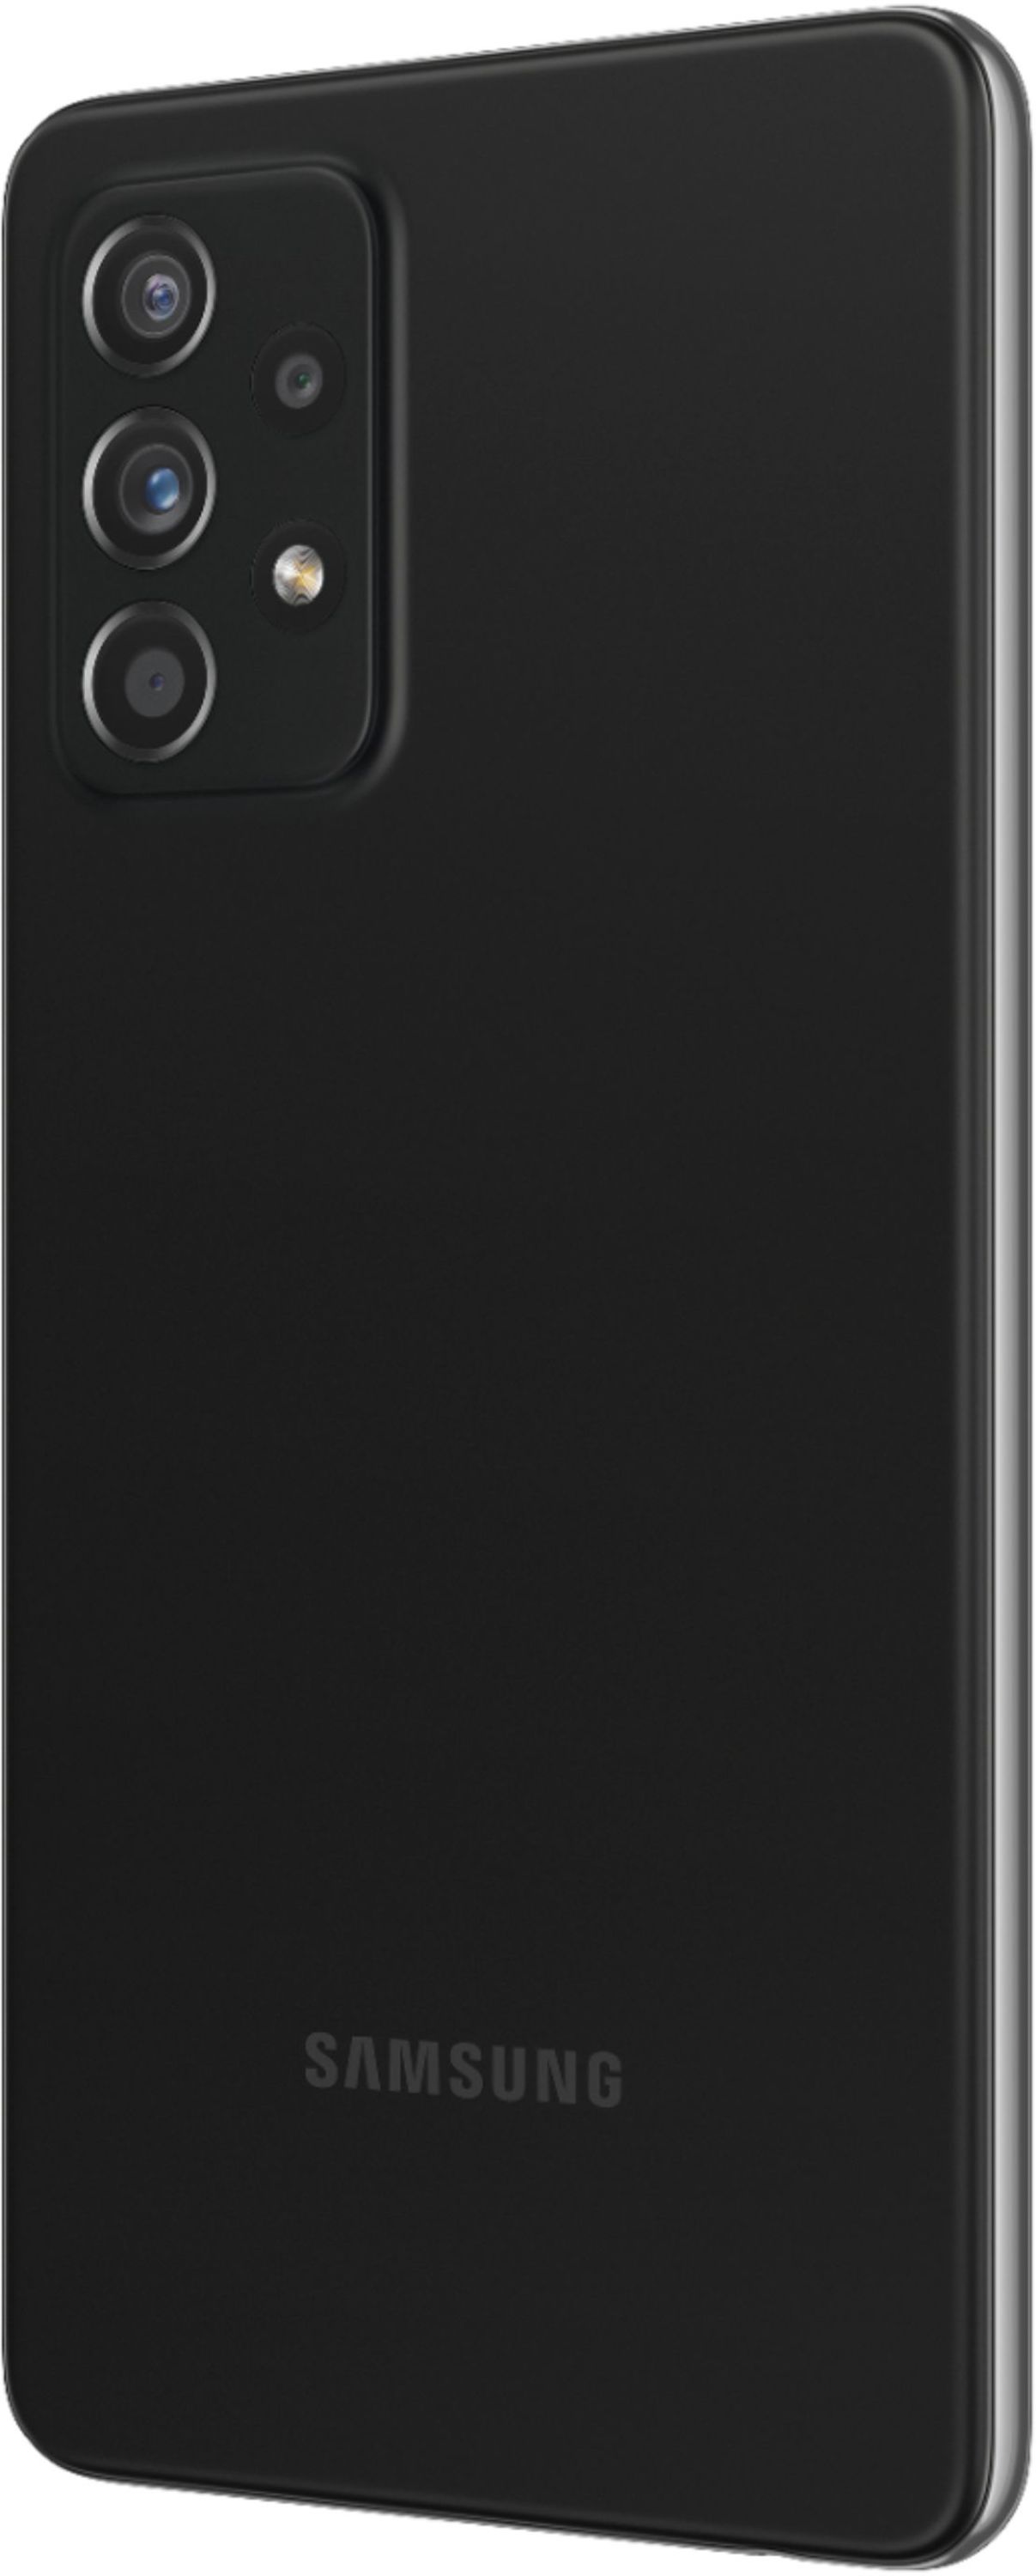 SAMSUNG Galaxy A52 5G A526U 128GB GSM / CDMA Unlocked Android Smartphone (US Version) - Awesome Black - image 4 of 6